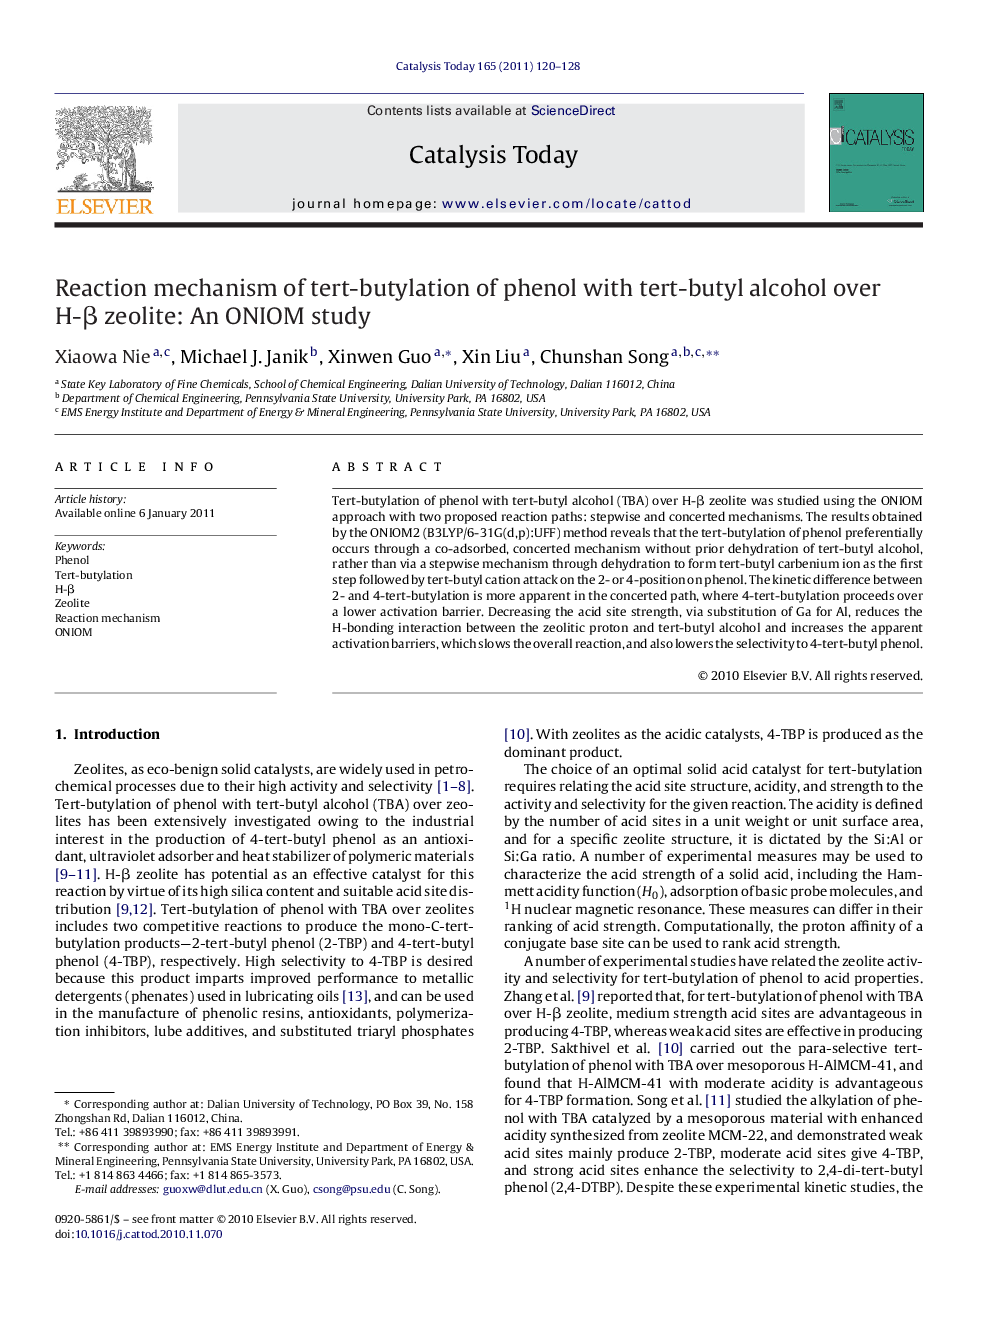 Reaction mechanism of tert-butylation of phenol with tert-butyl alcohol over H-β zeolite: An ONIOM study